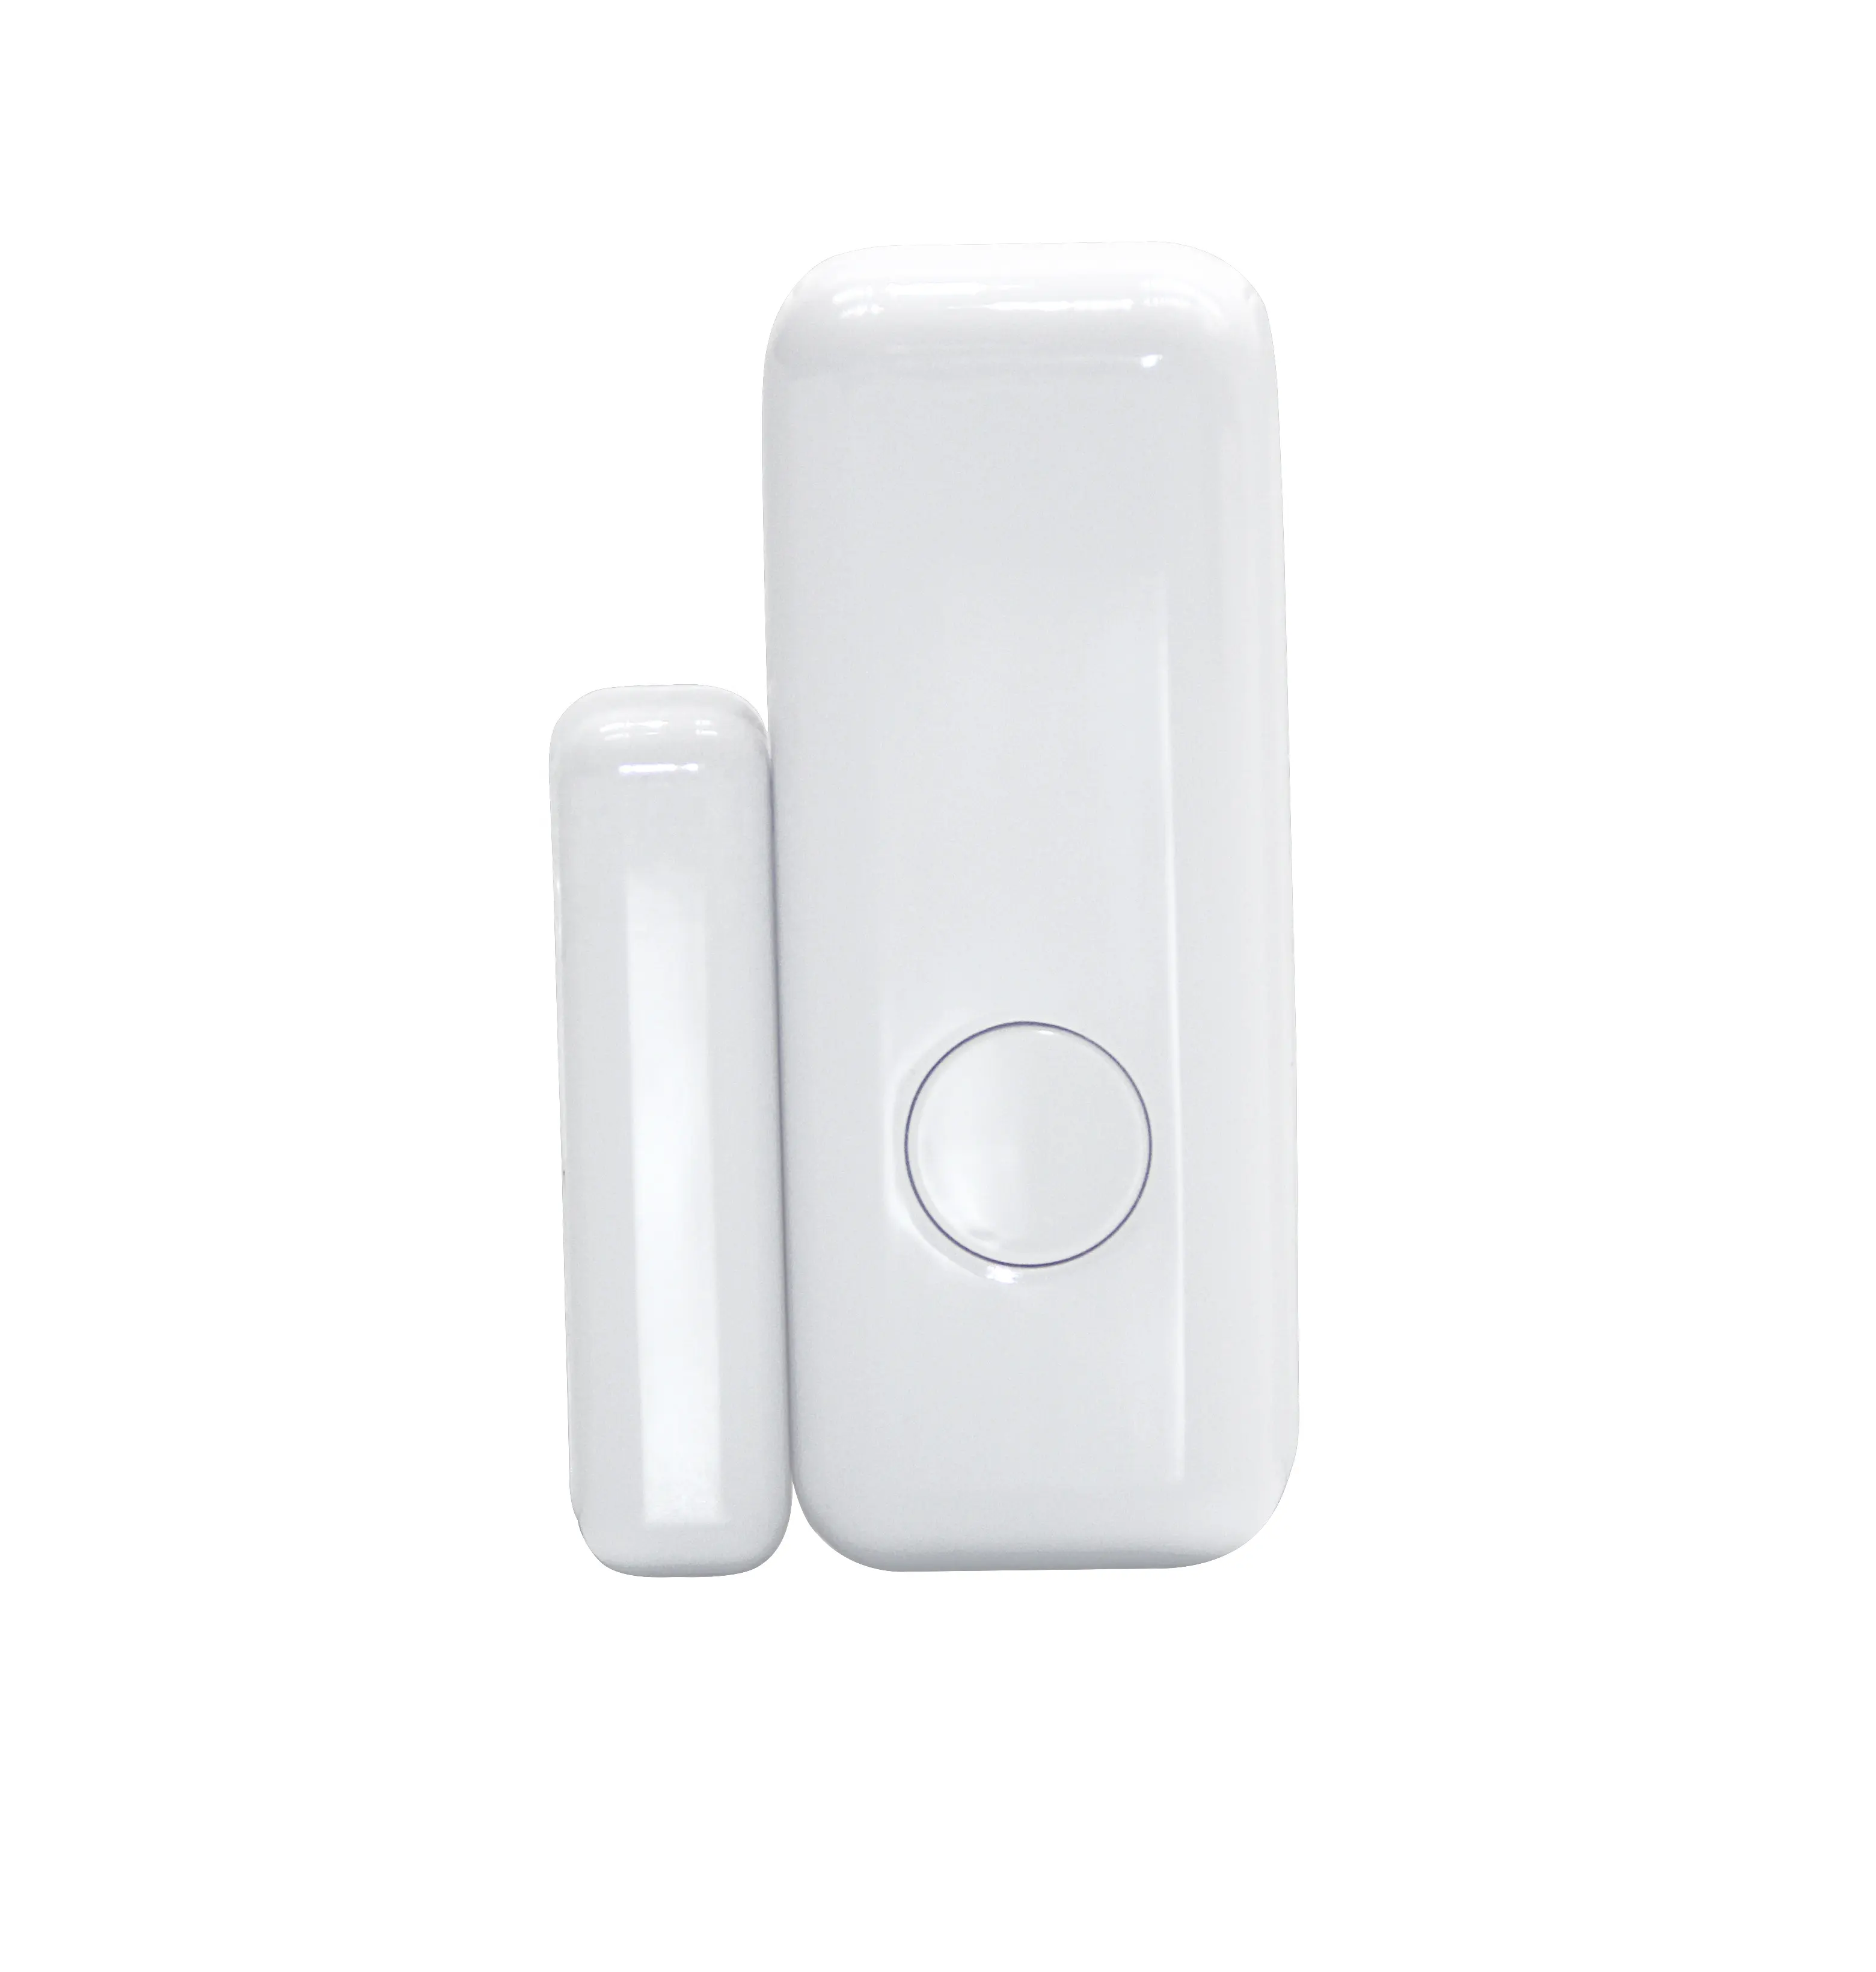 Vendita calda Smart Home Aarm sistema Wireless 433MHz porta/finestra sensore magnetico rilevatore Dontact allarme